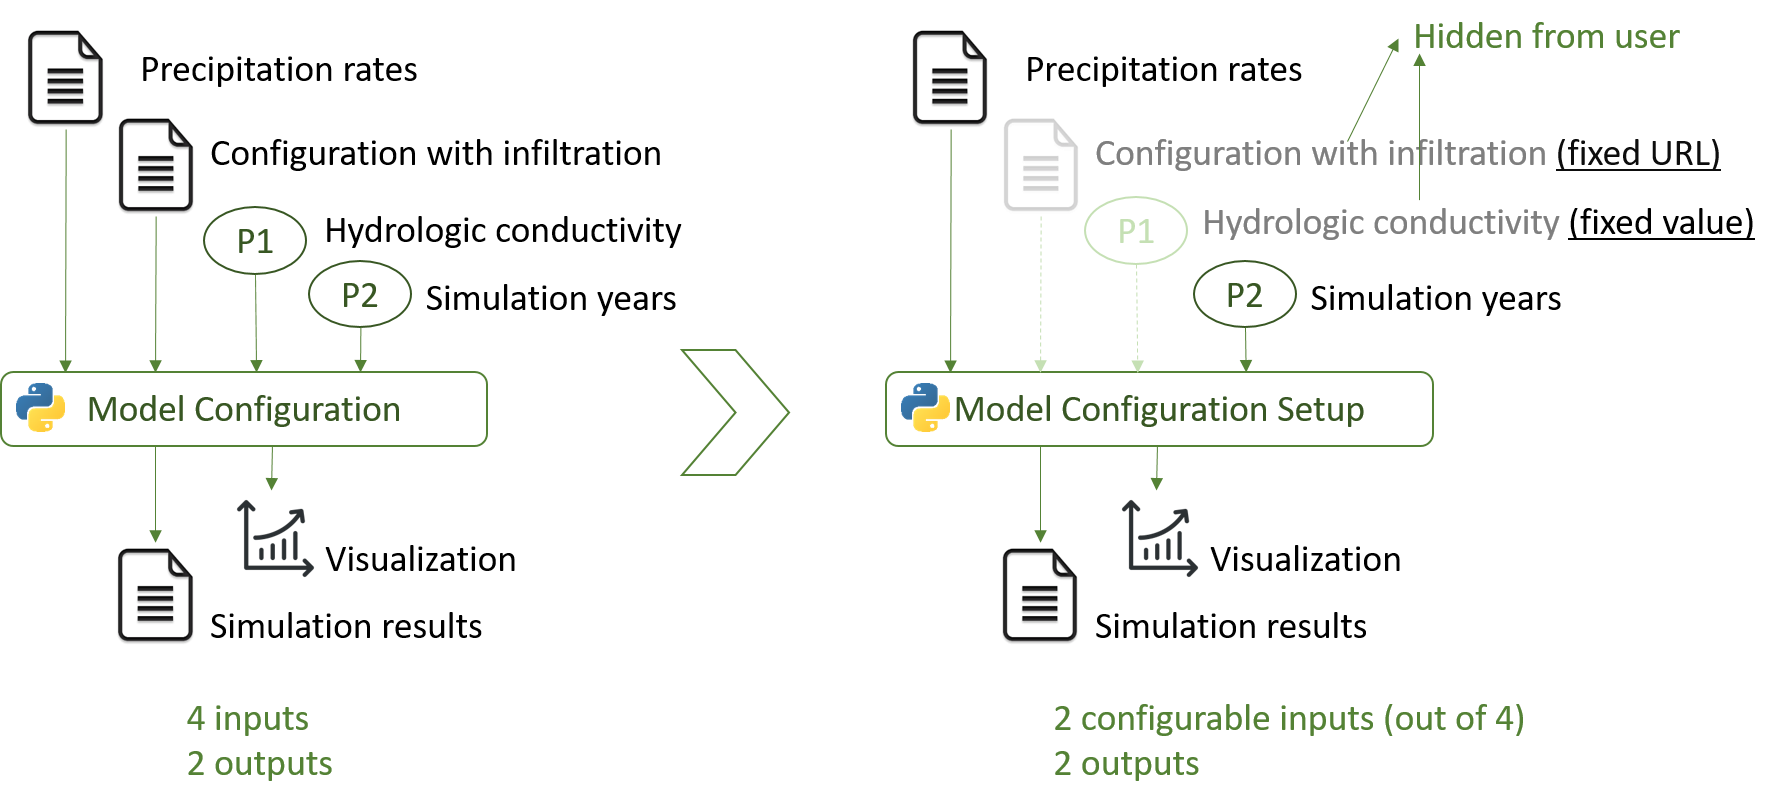 Model configuration versus model configuration setup